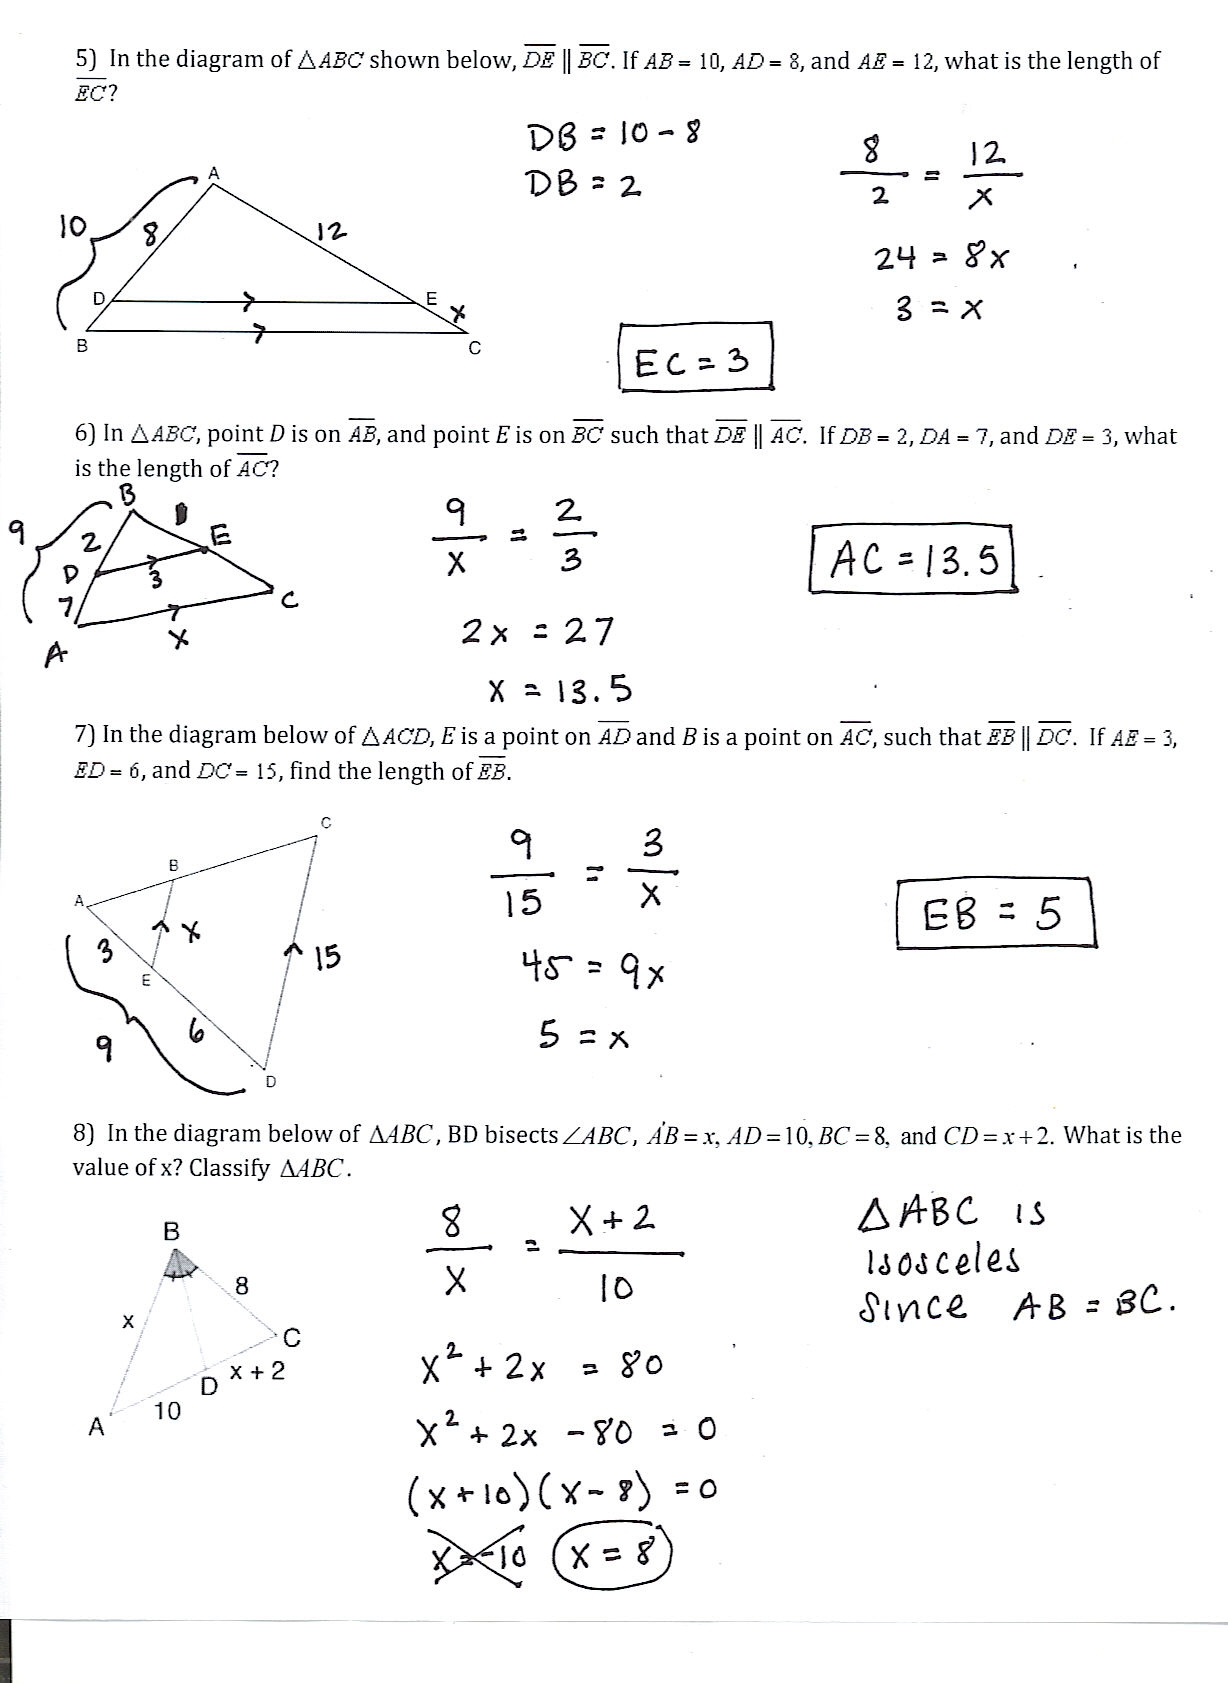 side-splitter-theorem-worksheet-answers